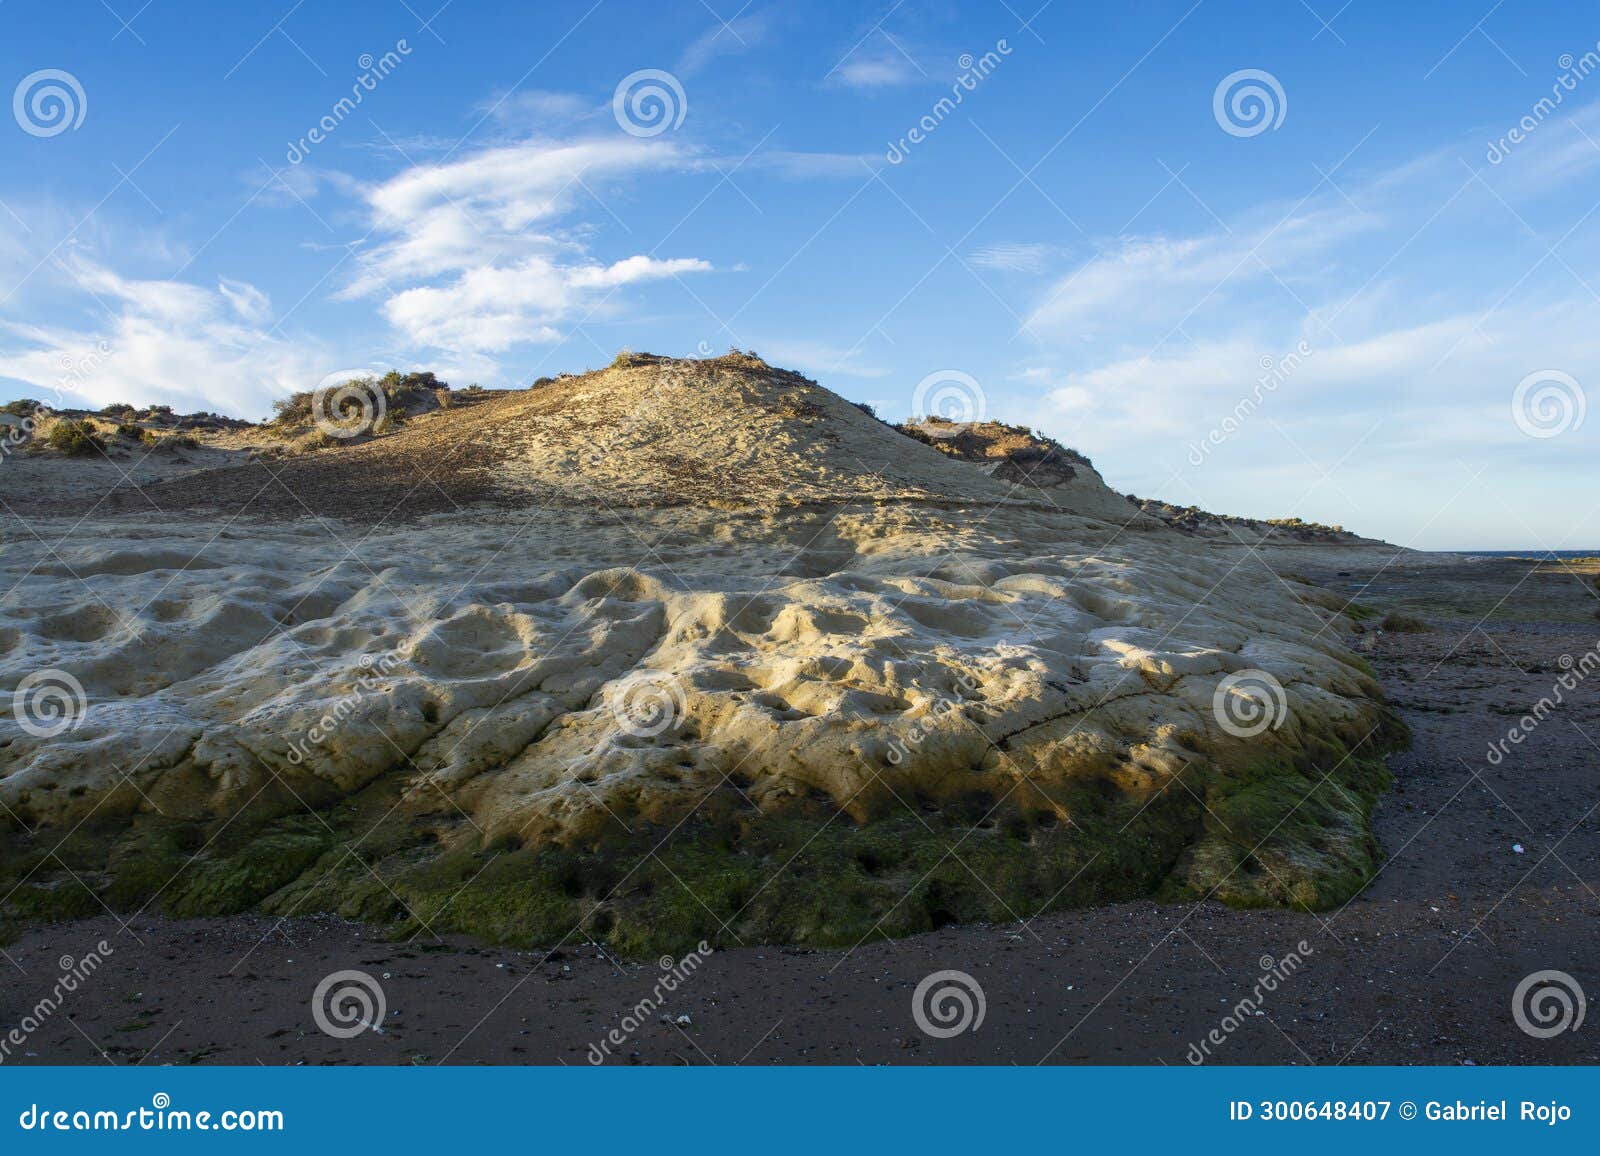 cerro avanzado protected area, , world heritage site, chubut province